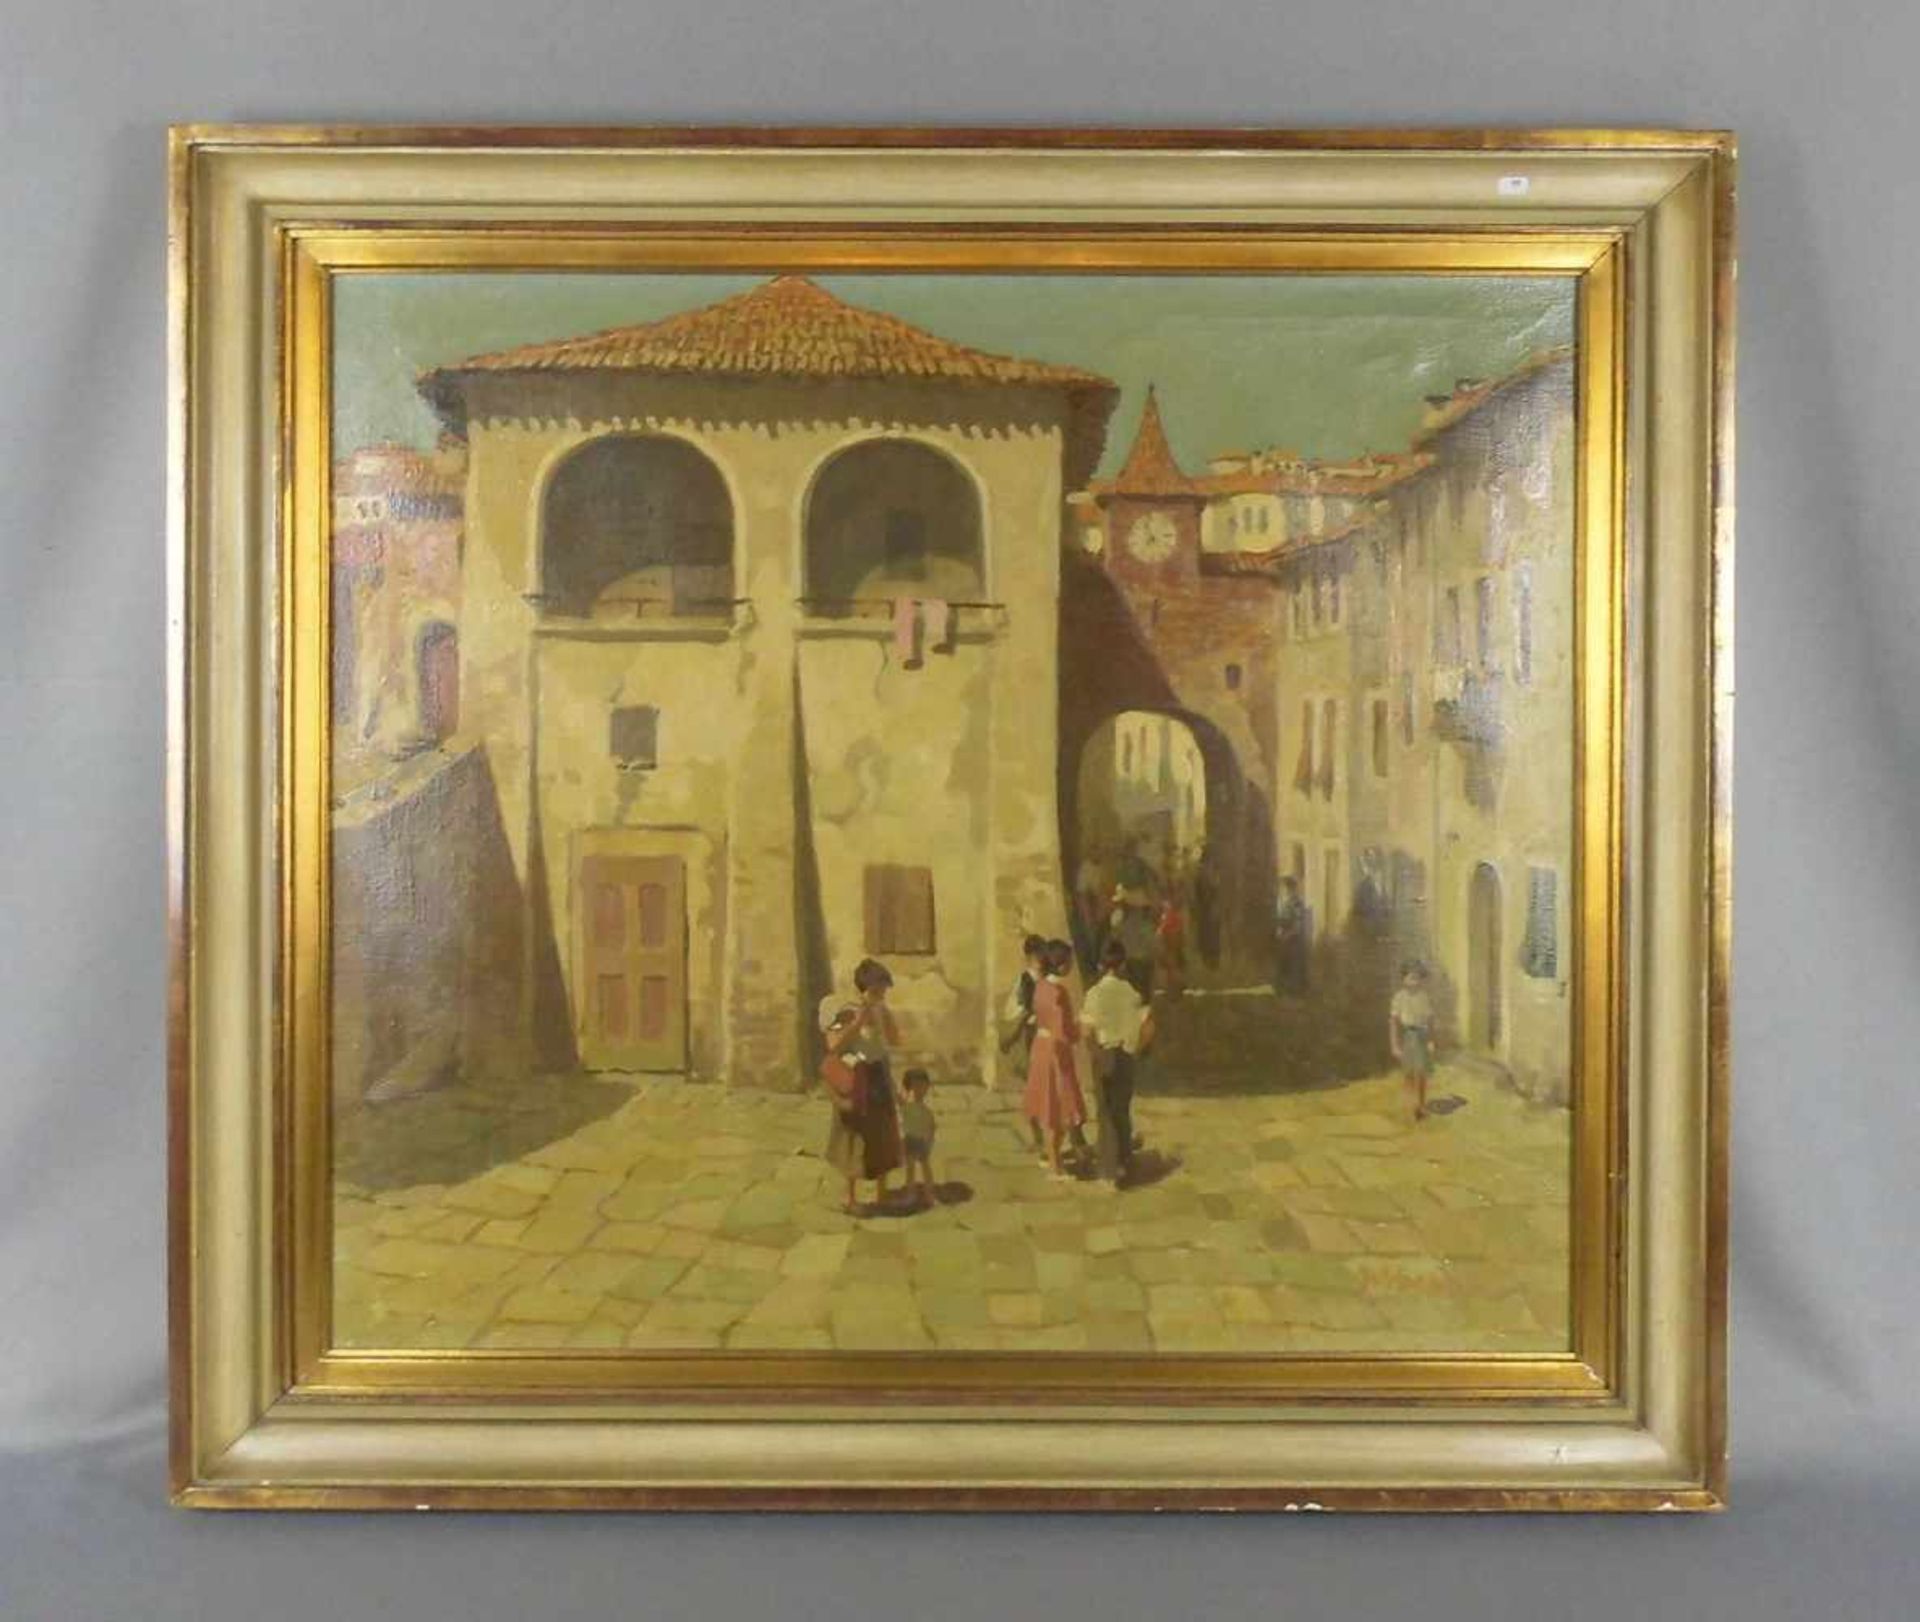 STRAHN, PETER JOSEF (Düren 1904-1997 Düsseldorf), Gemälde / painting: "Mediterraner Platz mit